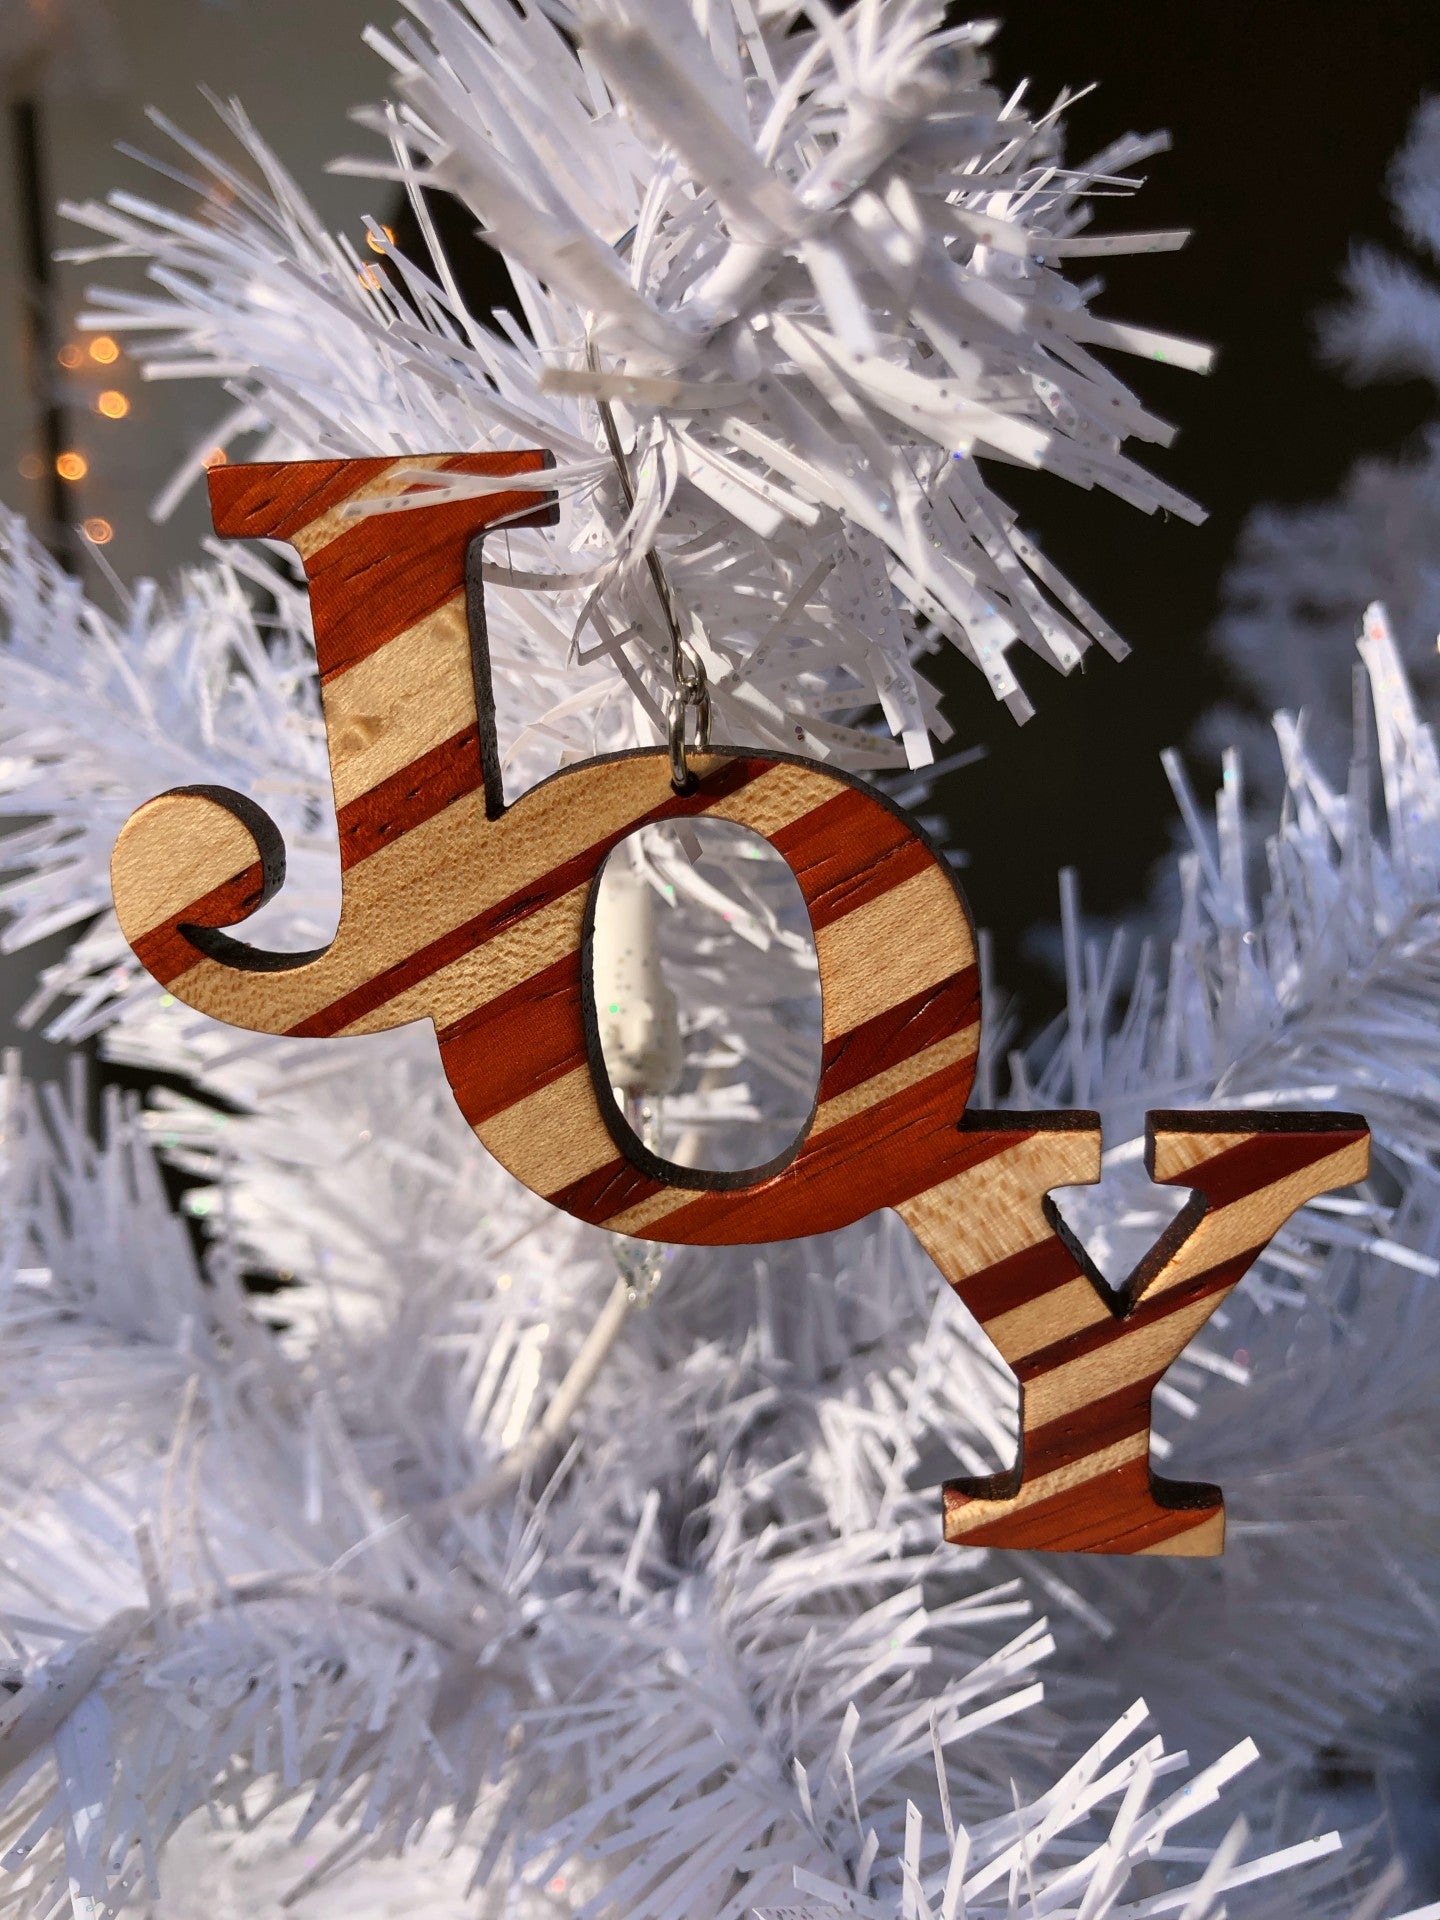 Joy Christmas ornament